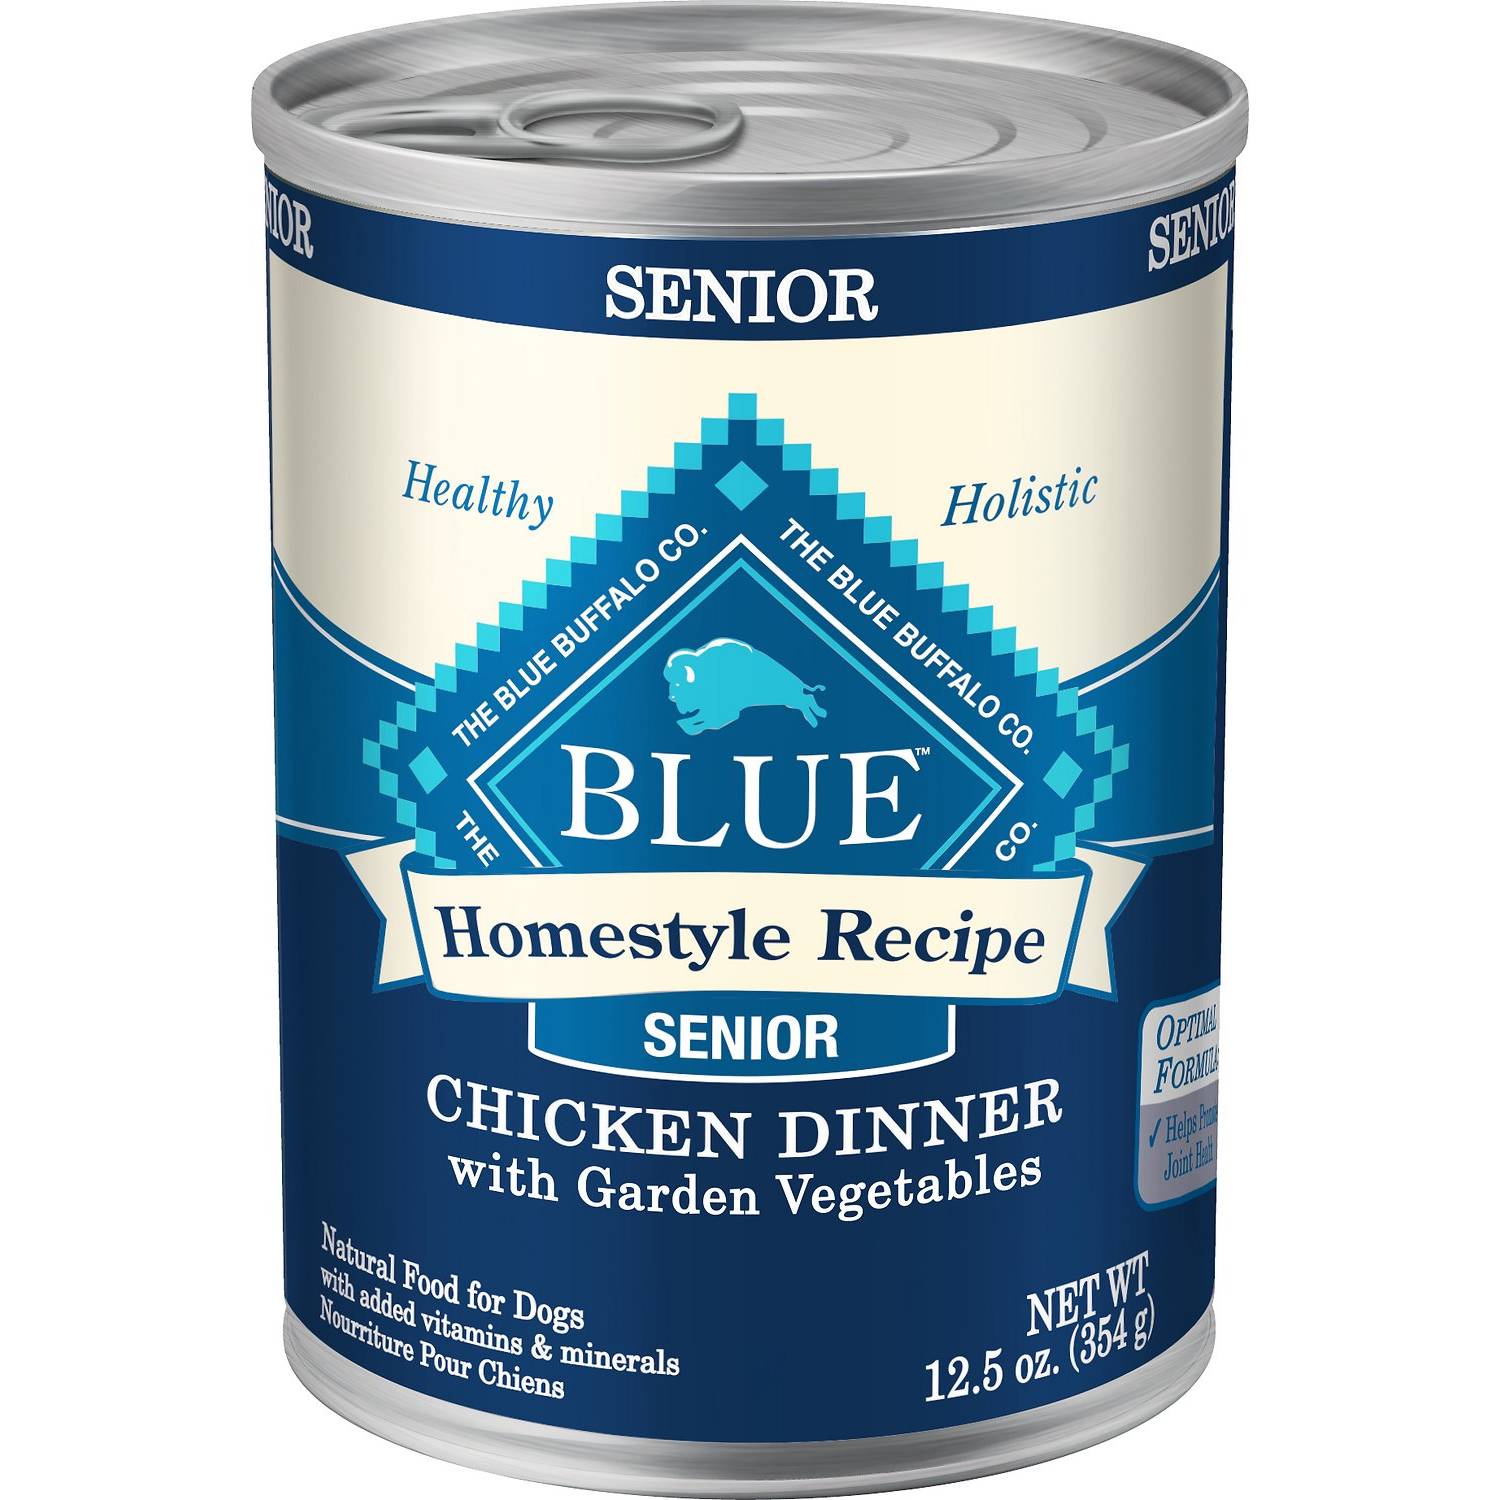 Blue Buffalo Homestyle Recipe Senior Chicken Dinner Canned Dog Food (1)